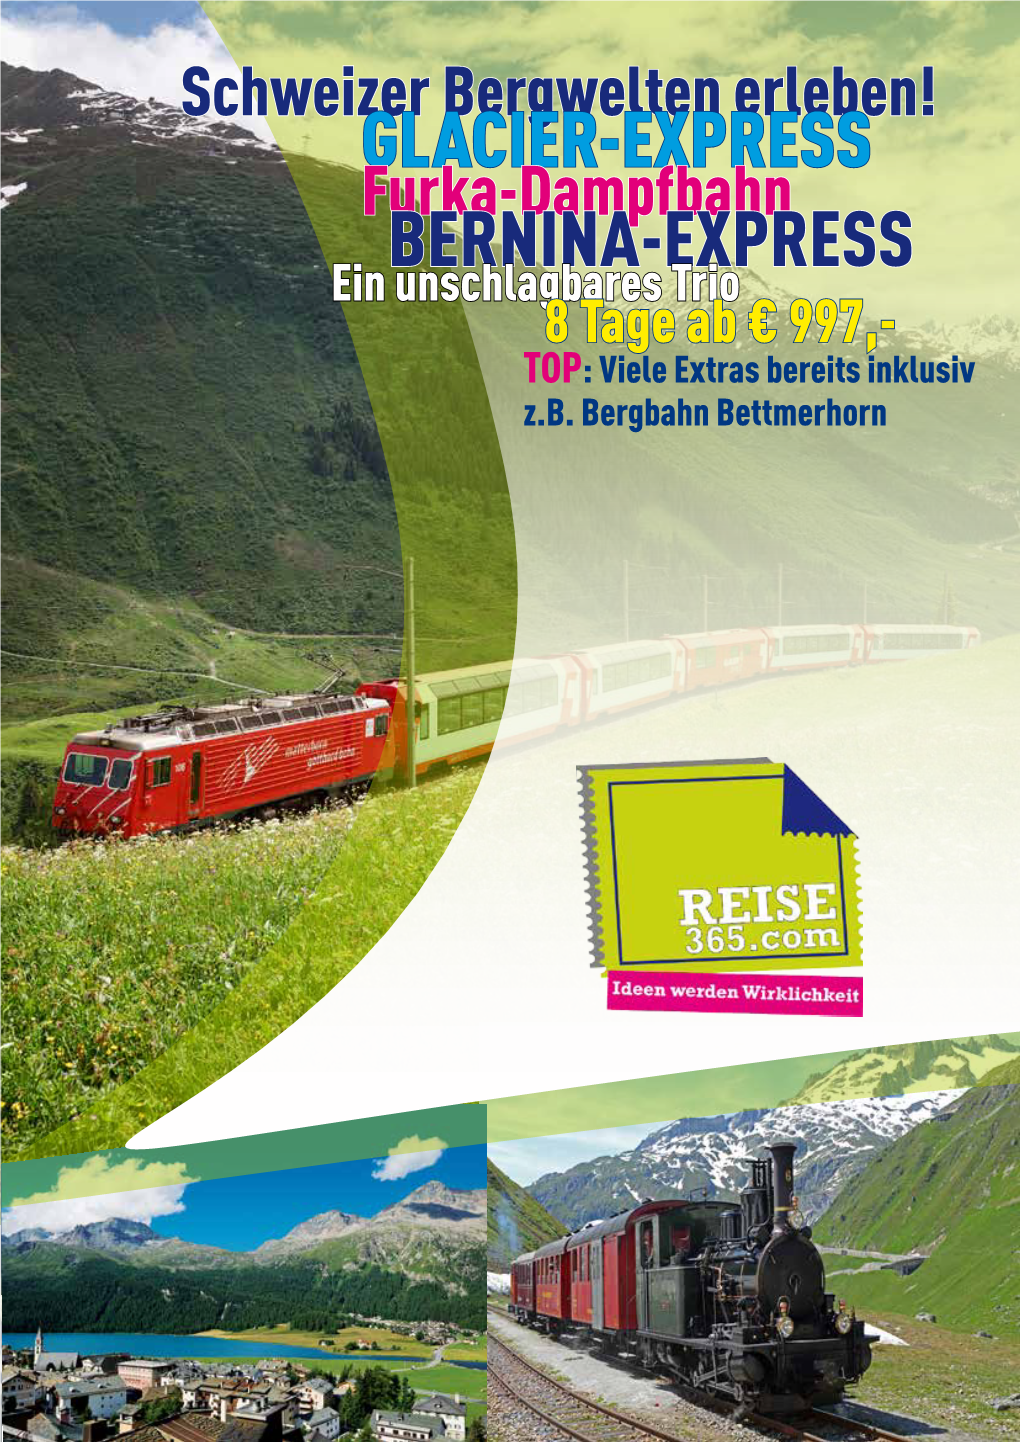 Glacier-Express Bernina-Express